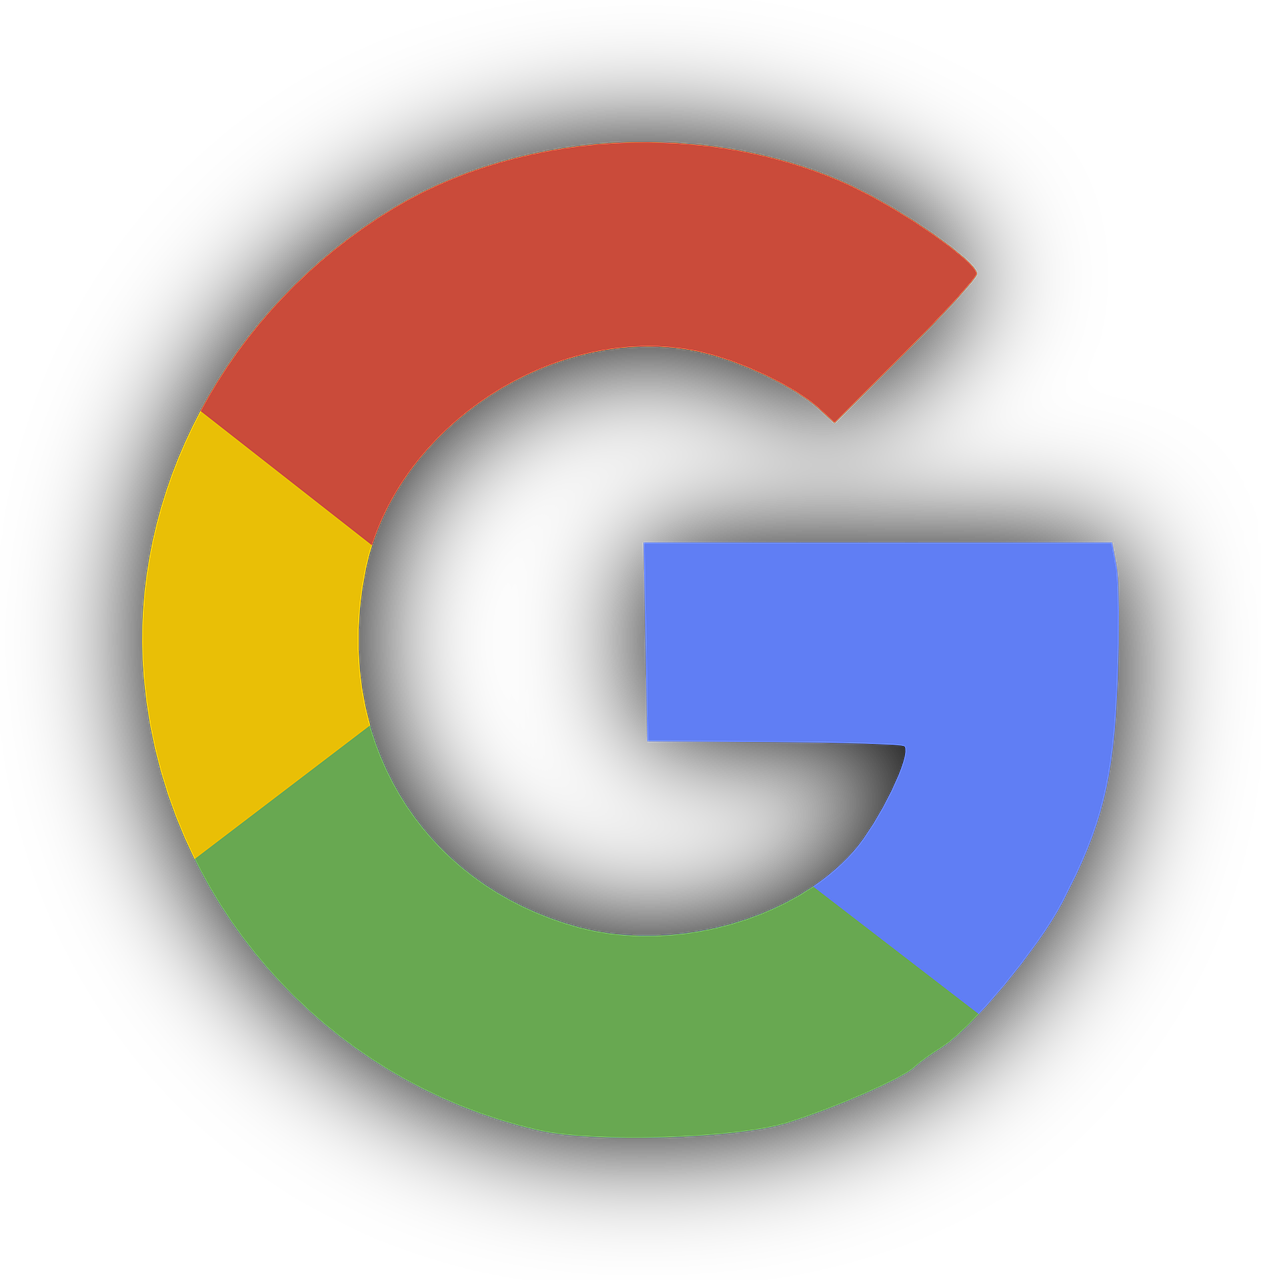 Download PNG image - Google Logo PNG Image 